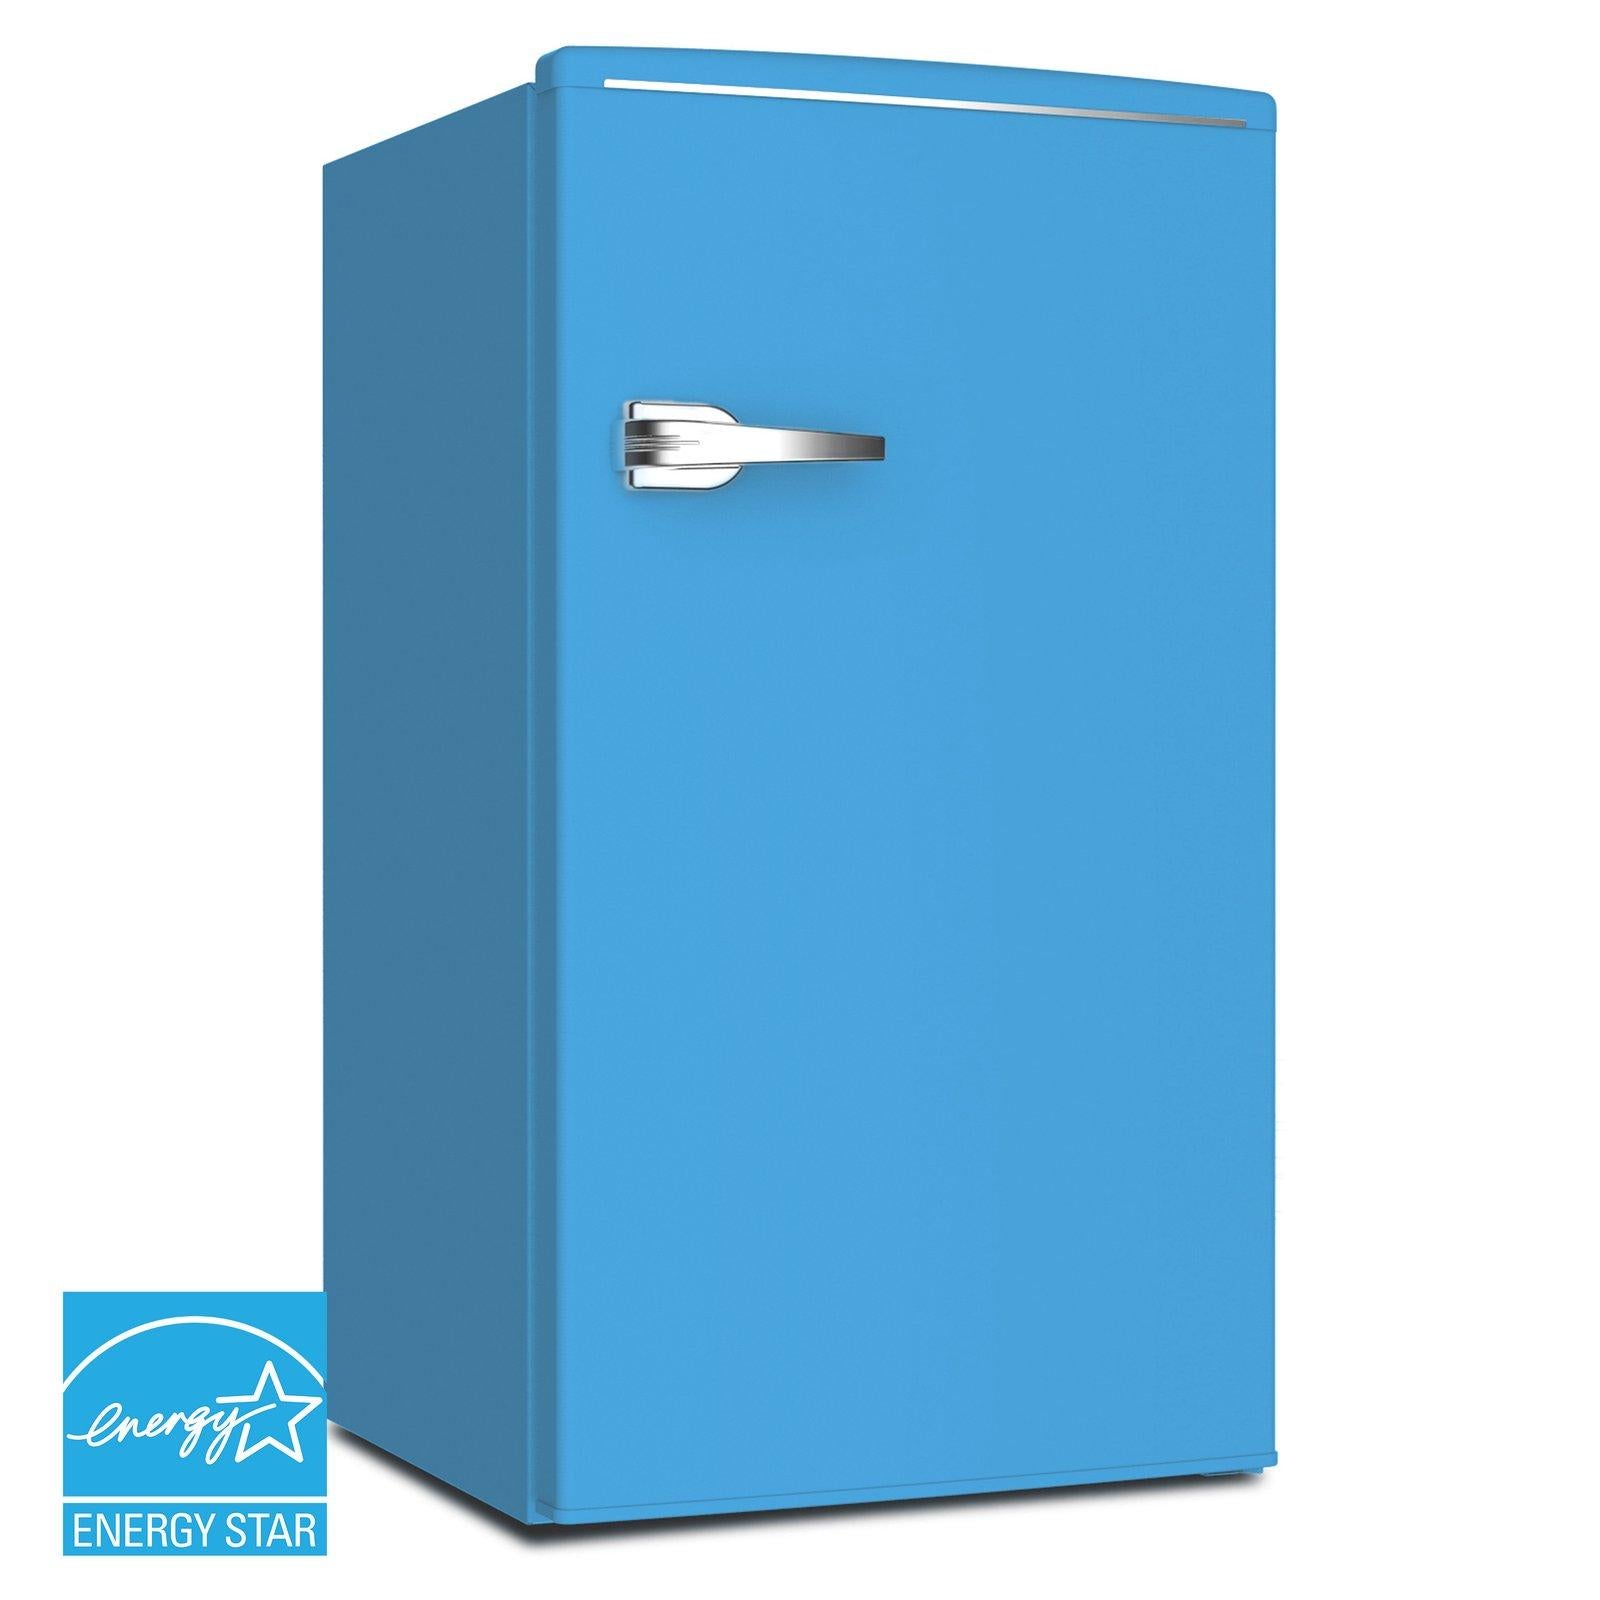 AVANTI RMRS31X5RIS 3.1 cu. ft. Retro Compact Refrigerator